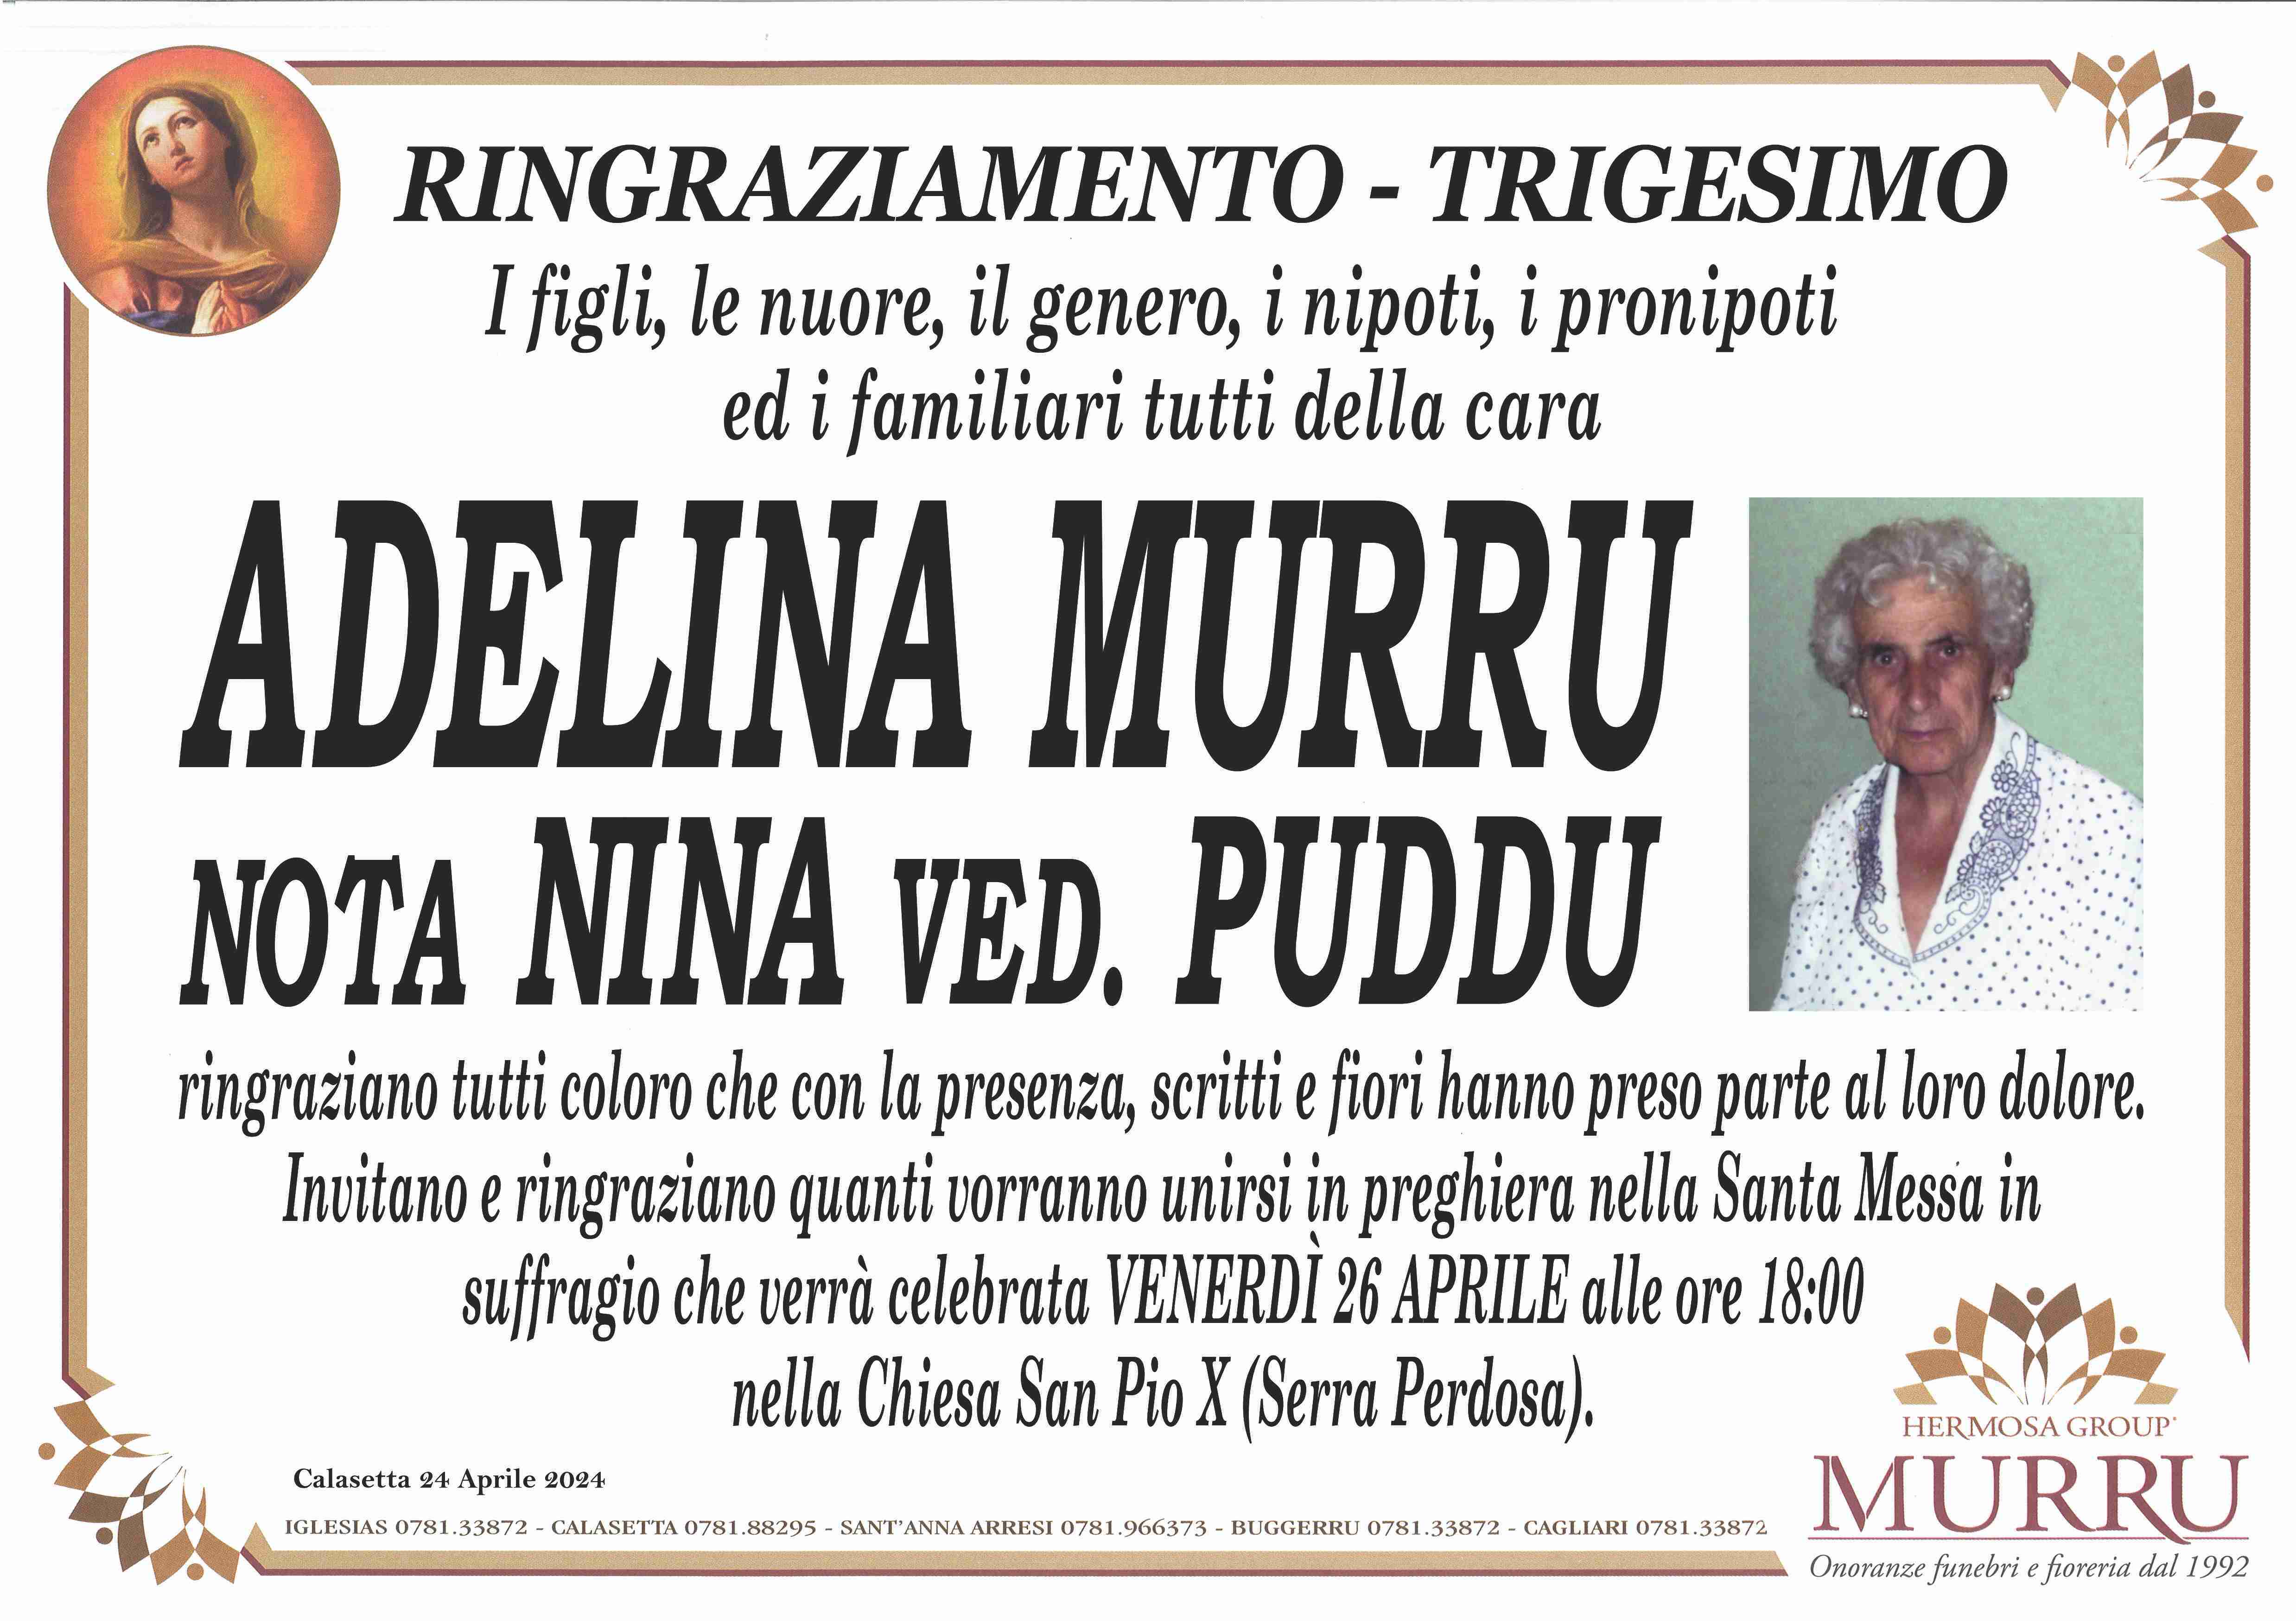 Adelina Murru nota Nina